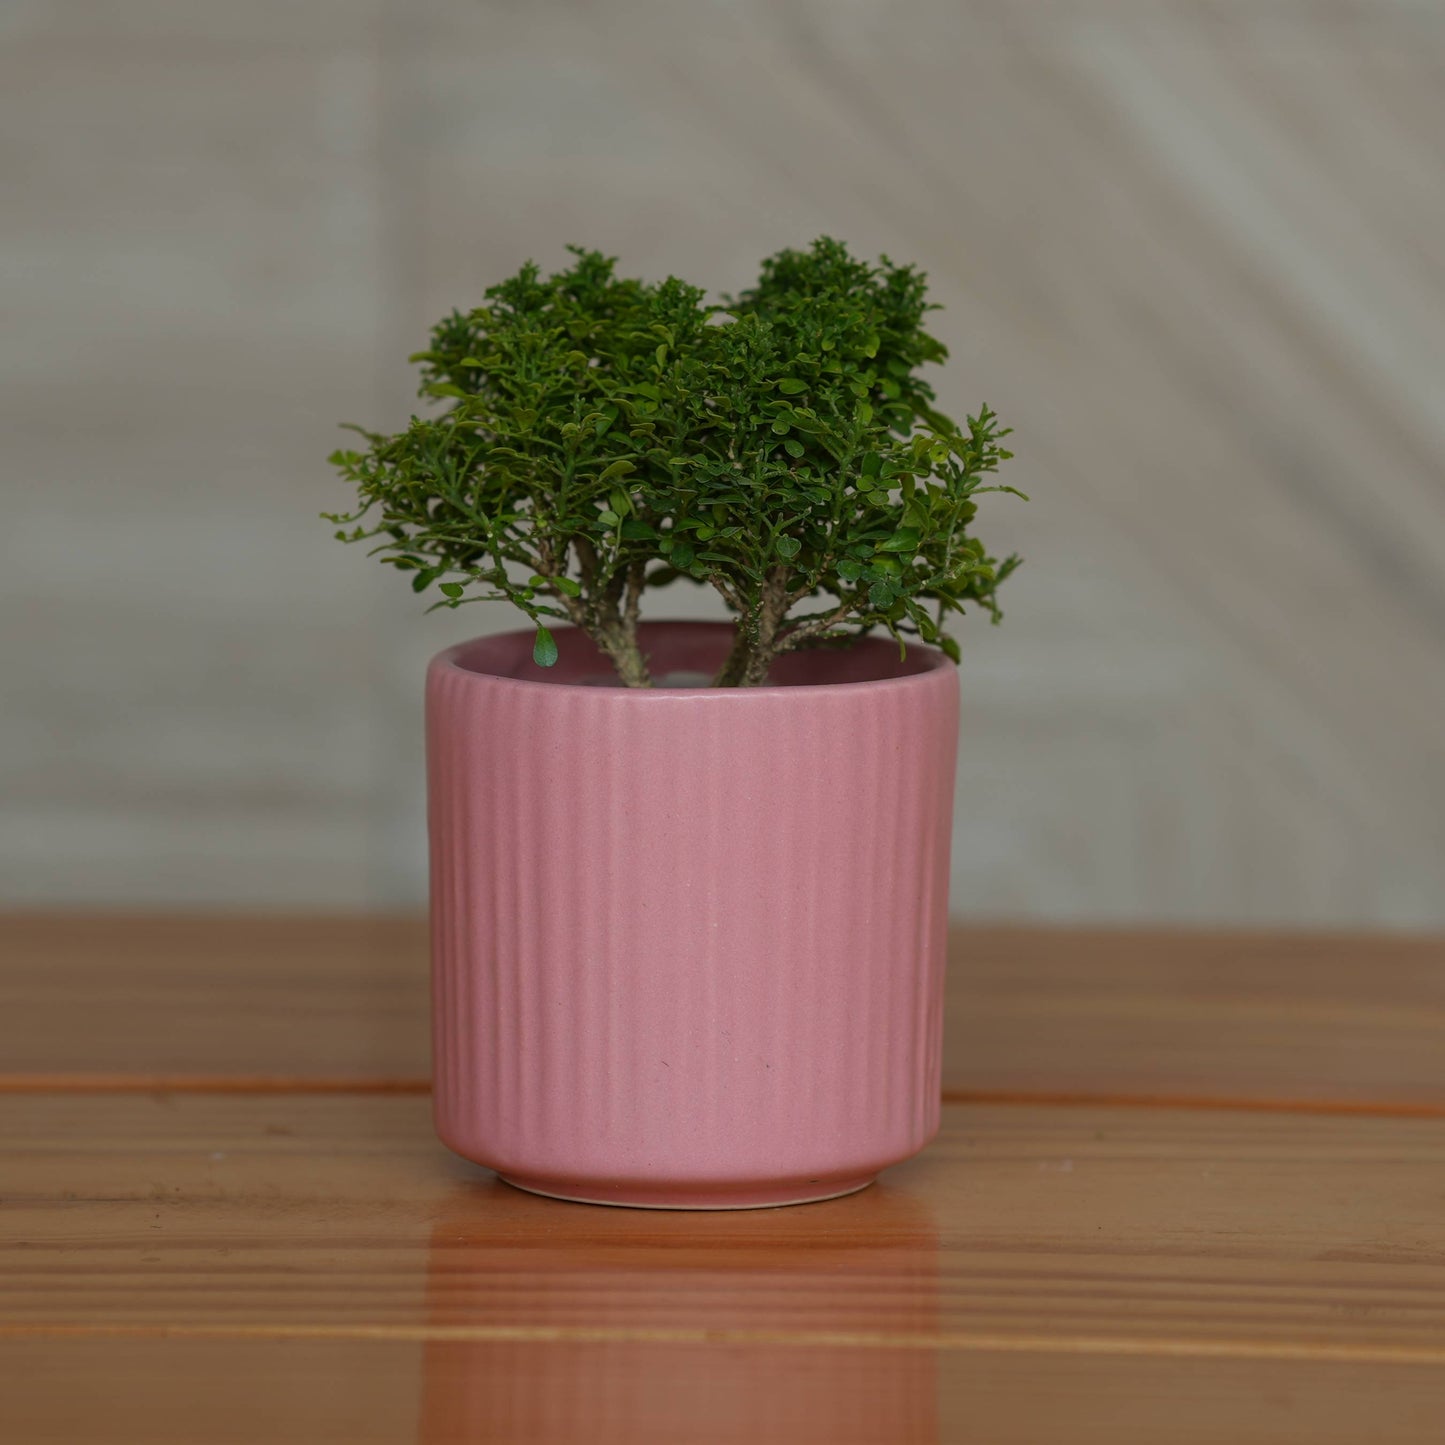 Ceramic Round Vertical Stripes Planter/Pot For Plants